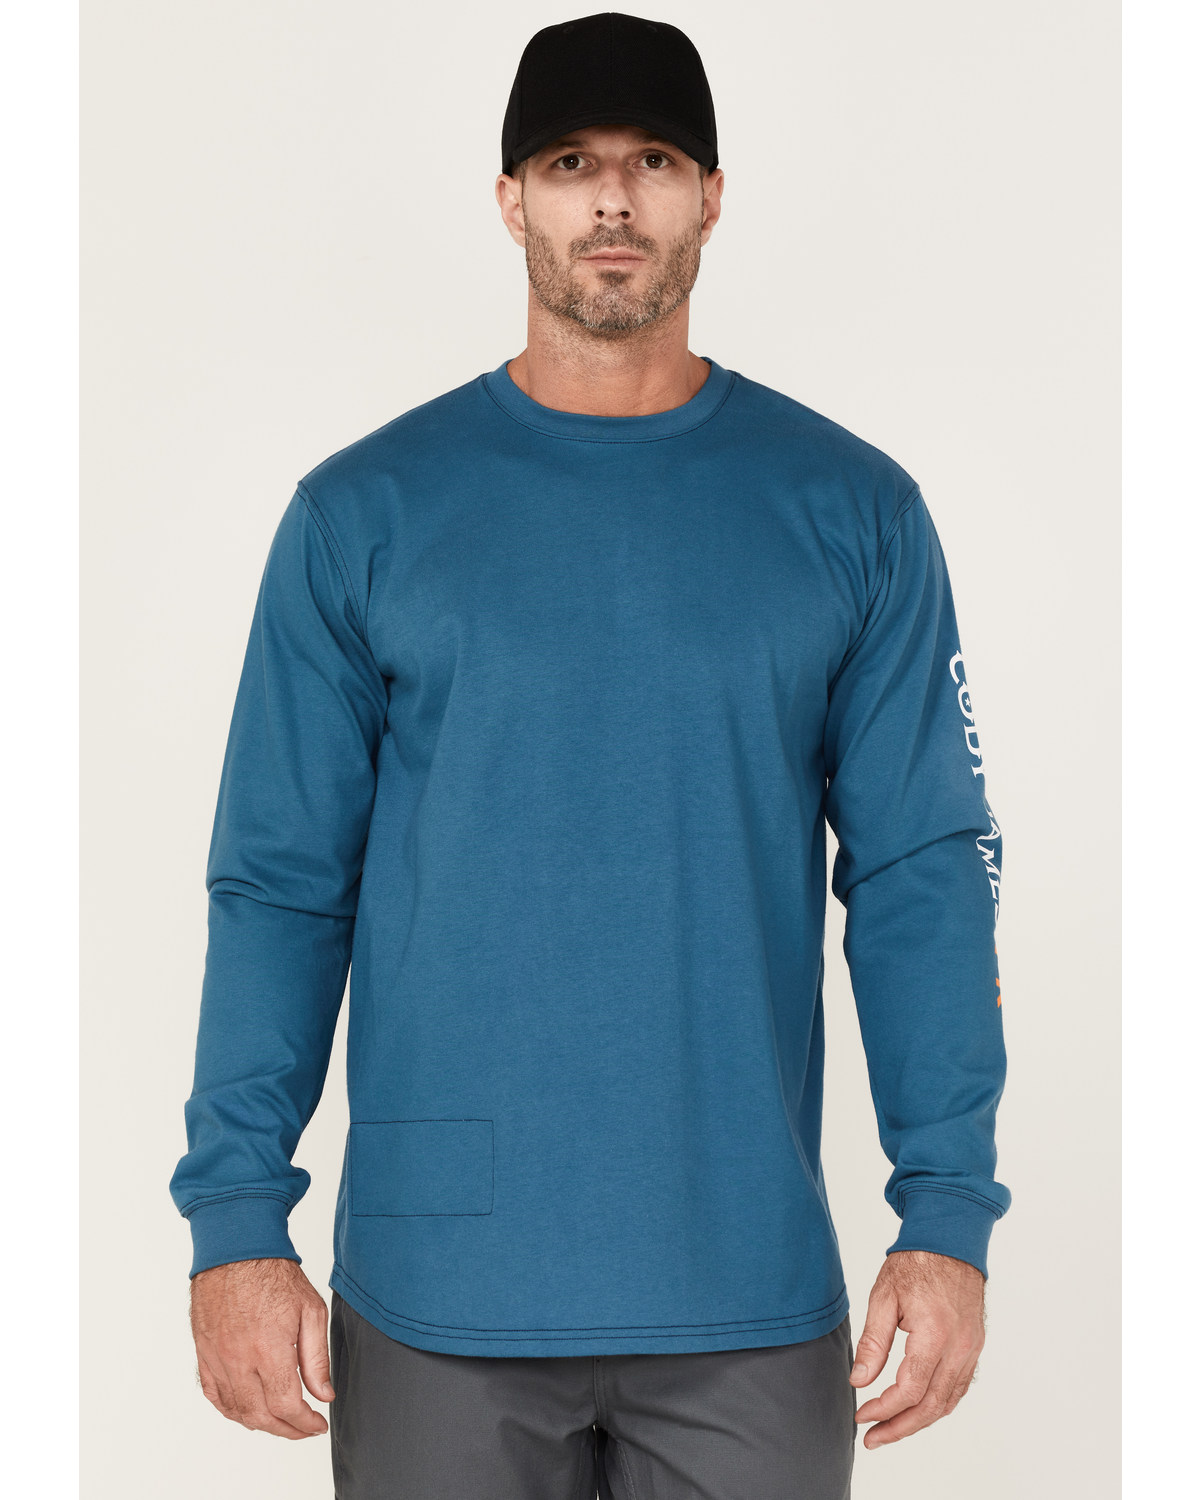 Cody James Men's FR Logo Long Sleeve Work T-Shirt